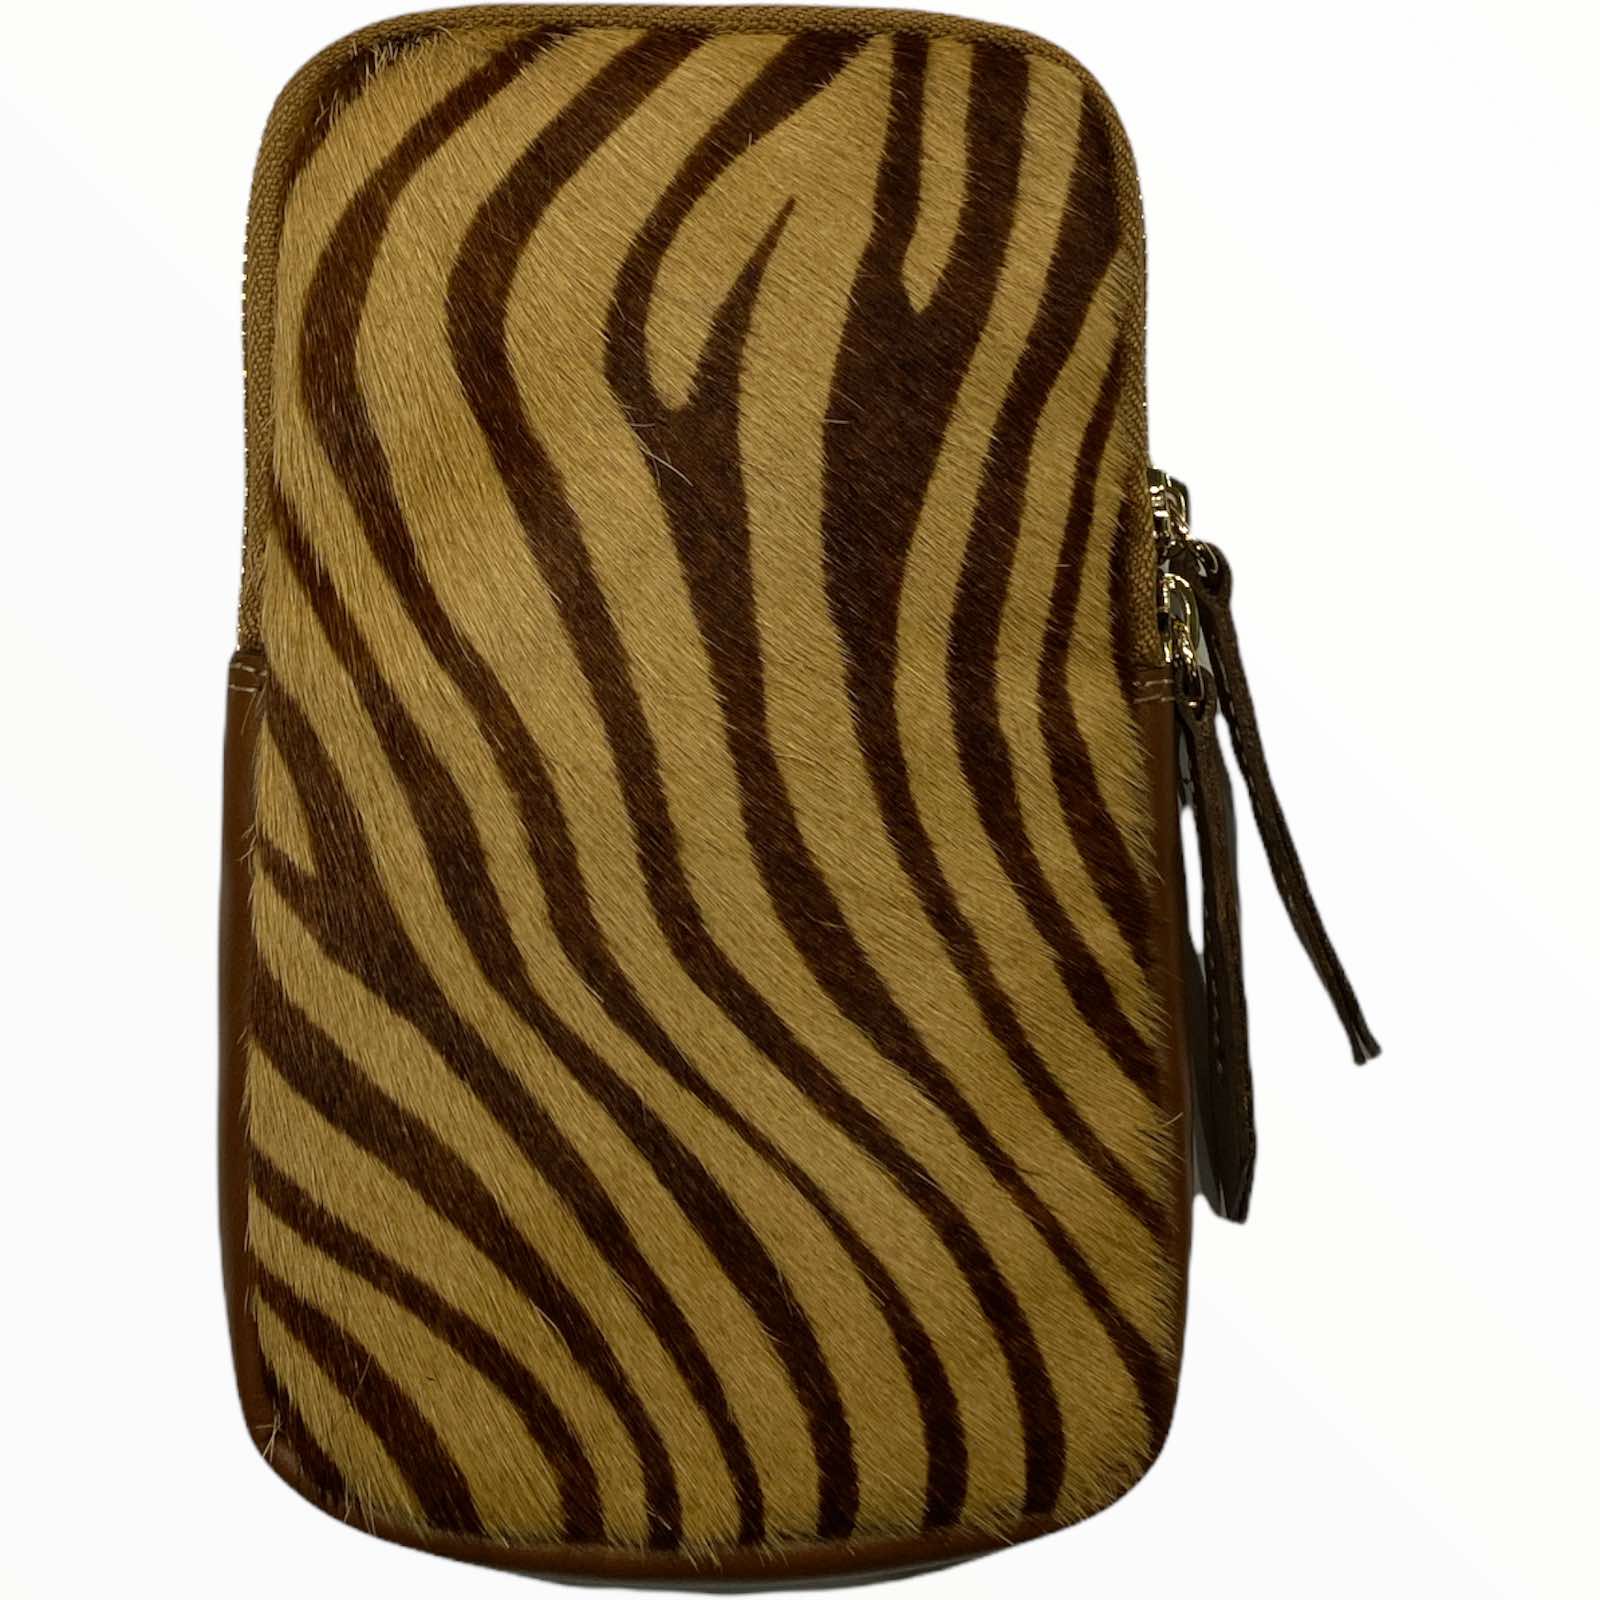 Brown-beige zebra-print mobile leather case